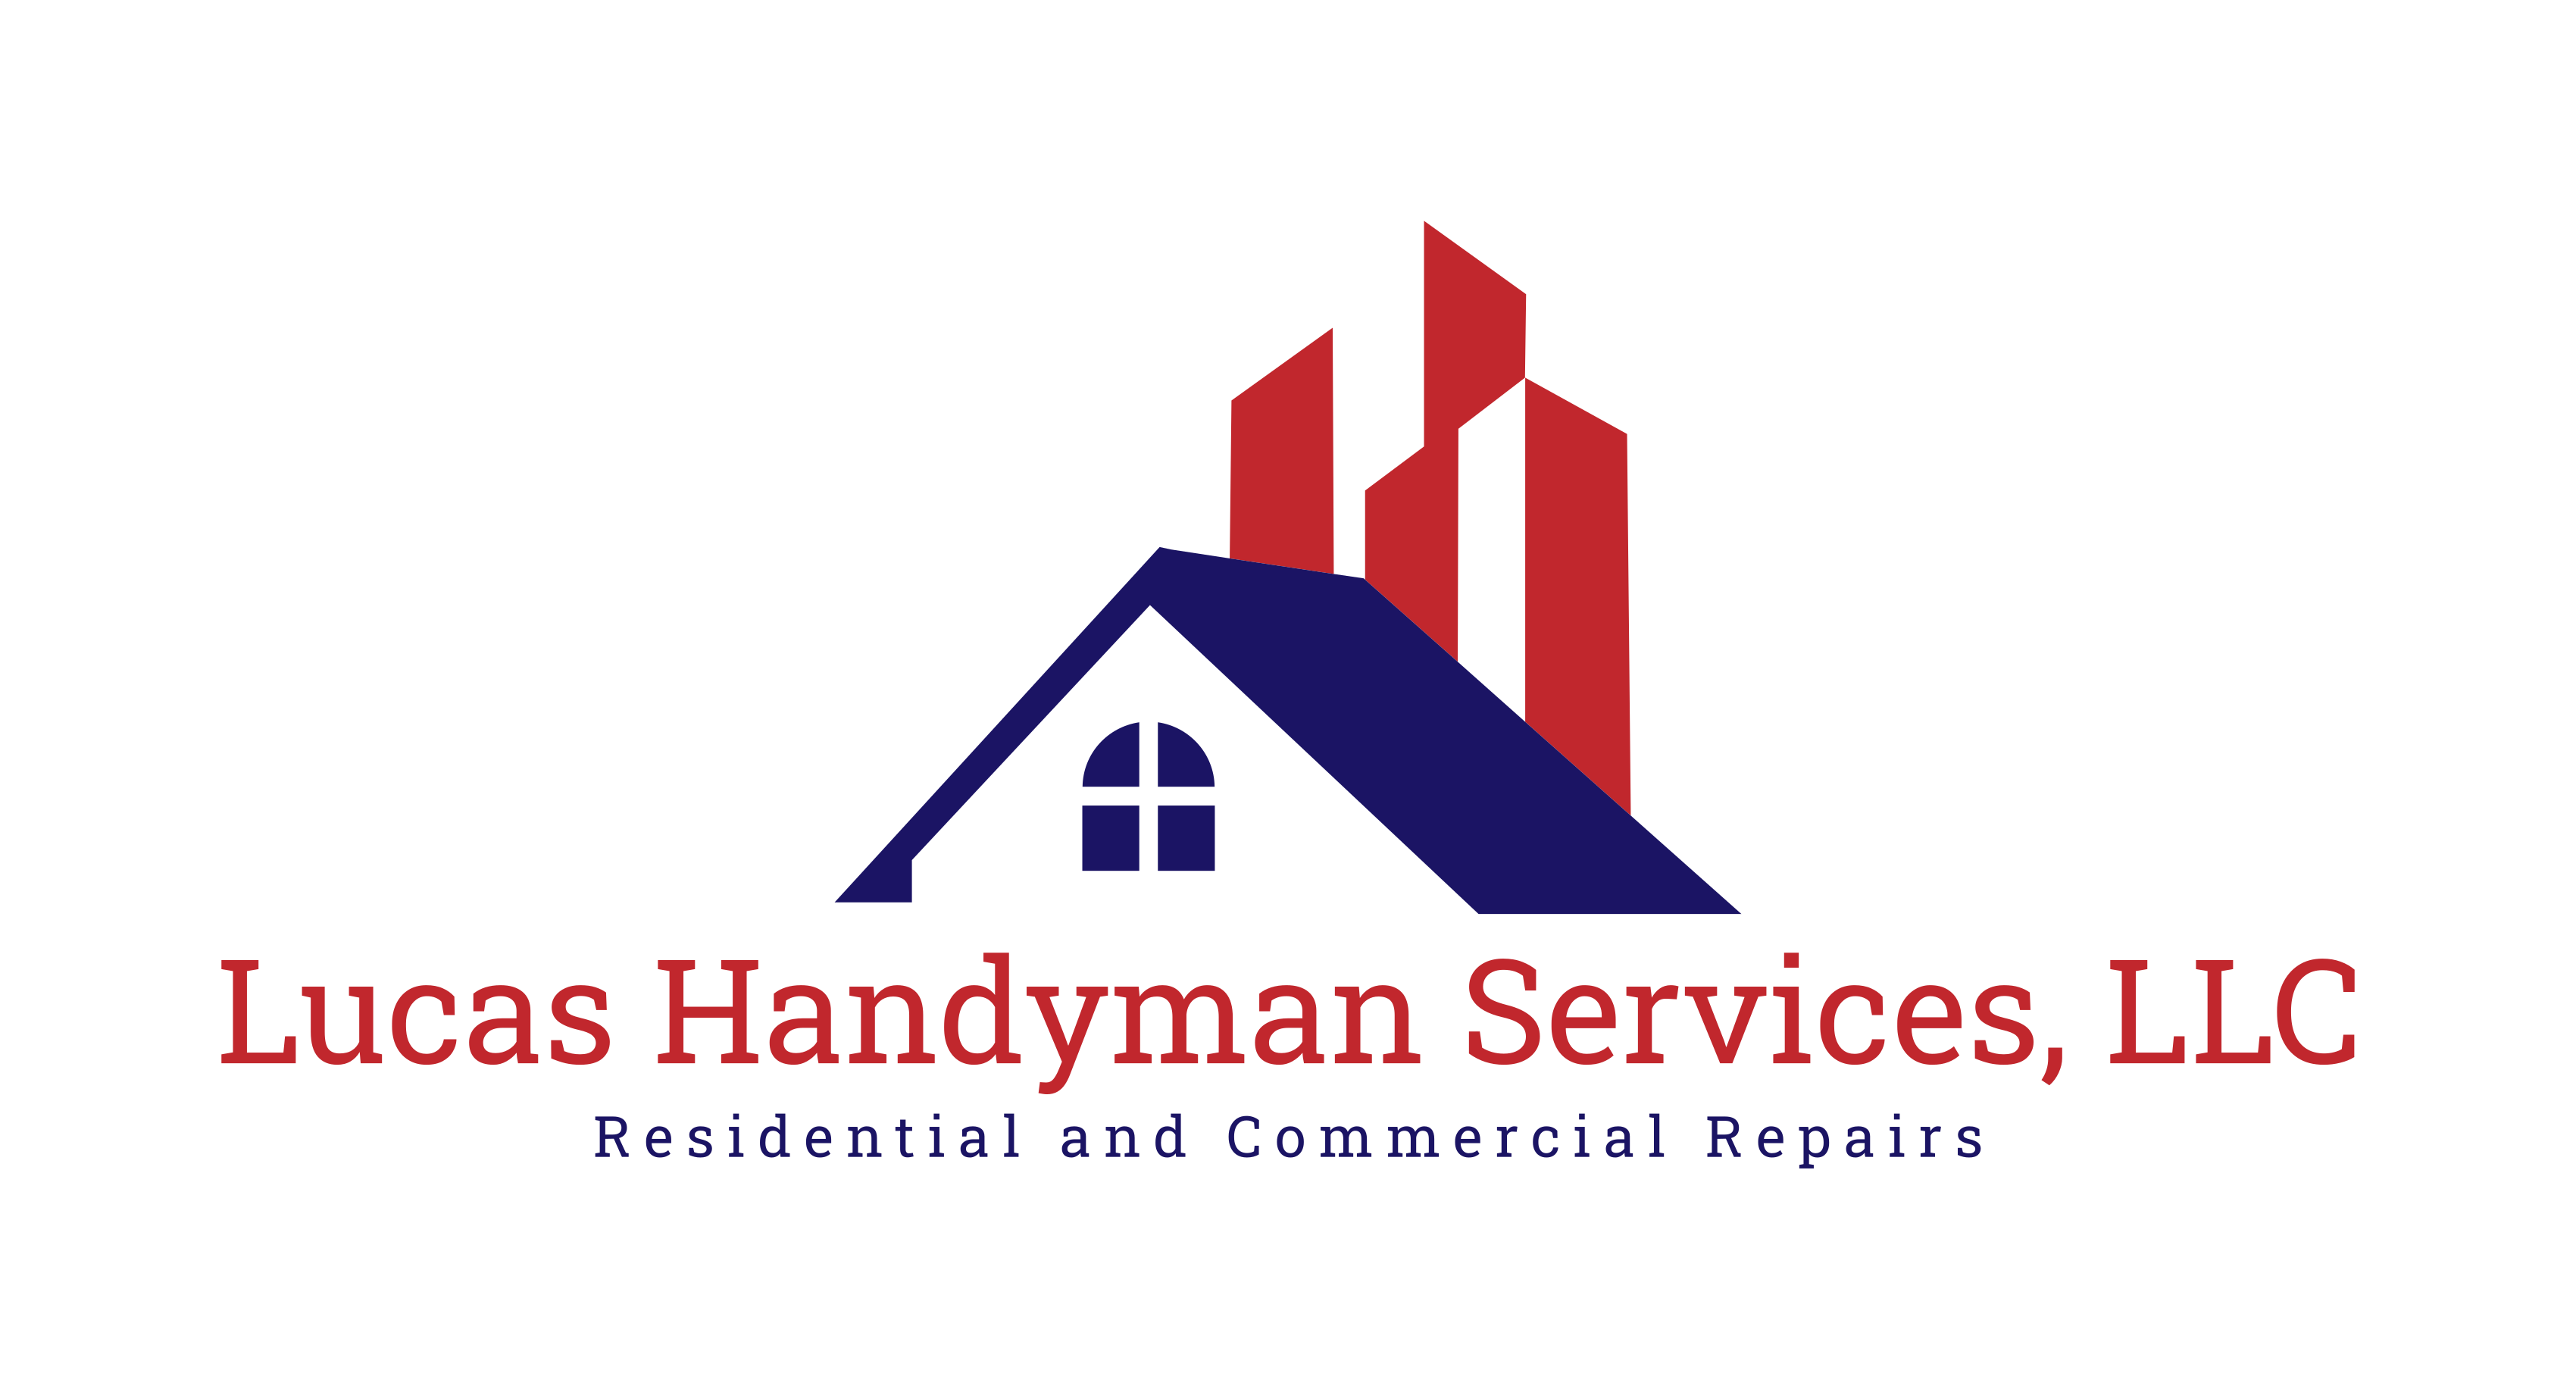 Lucas Handyman Services, LLC